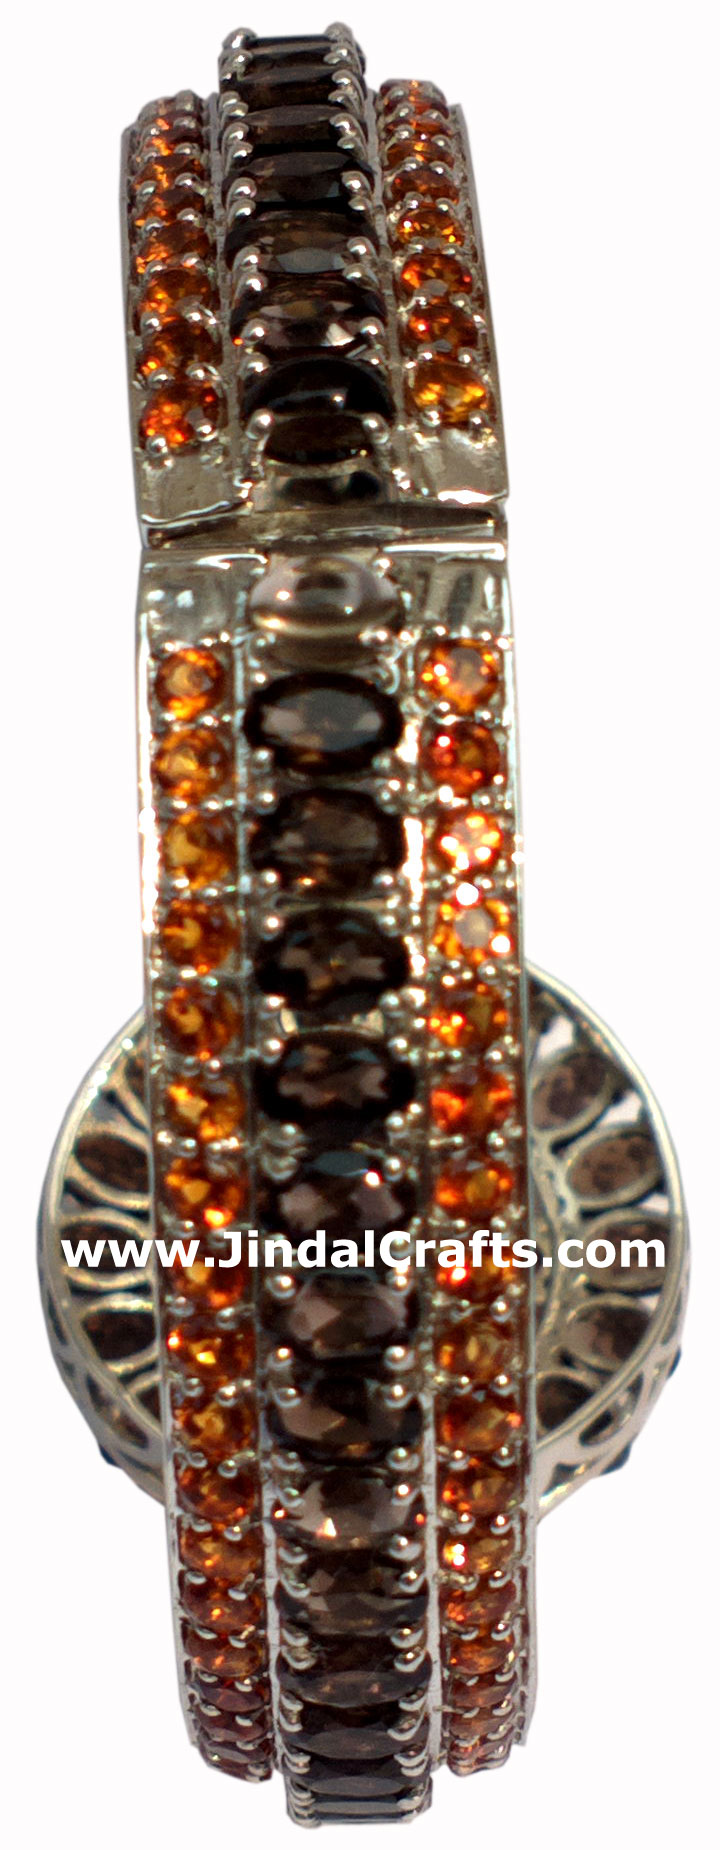 Silver & Semi Precious Stones Bracelet - Indian 925 Sterling Silver Jewelry Arts